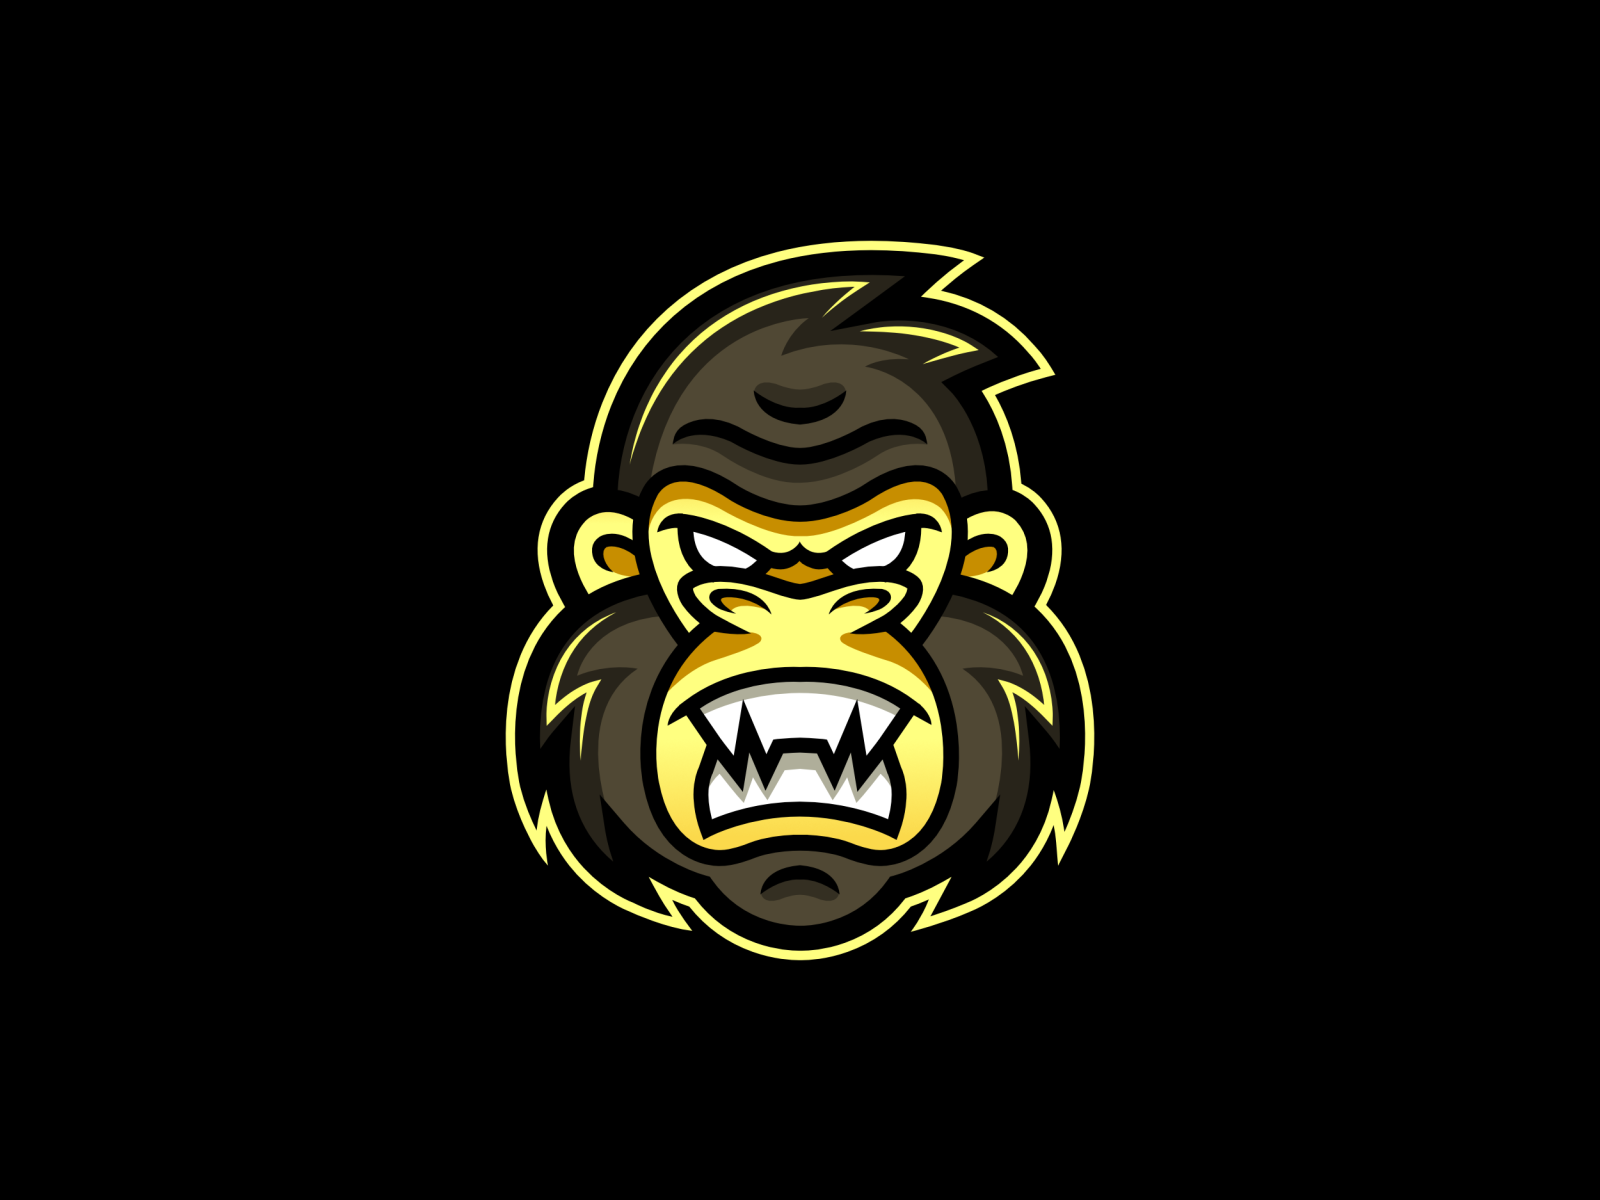 Gorilla Mascot Logo by Beau Lawson on Dribbble